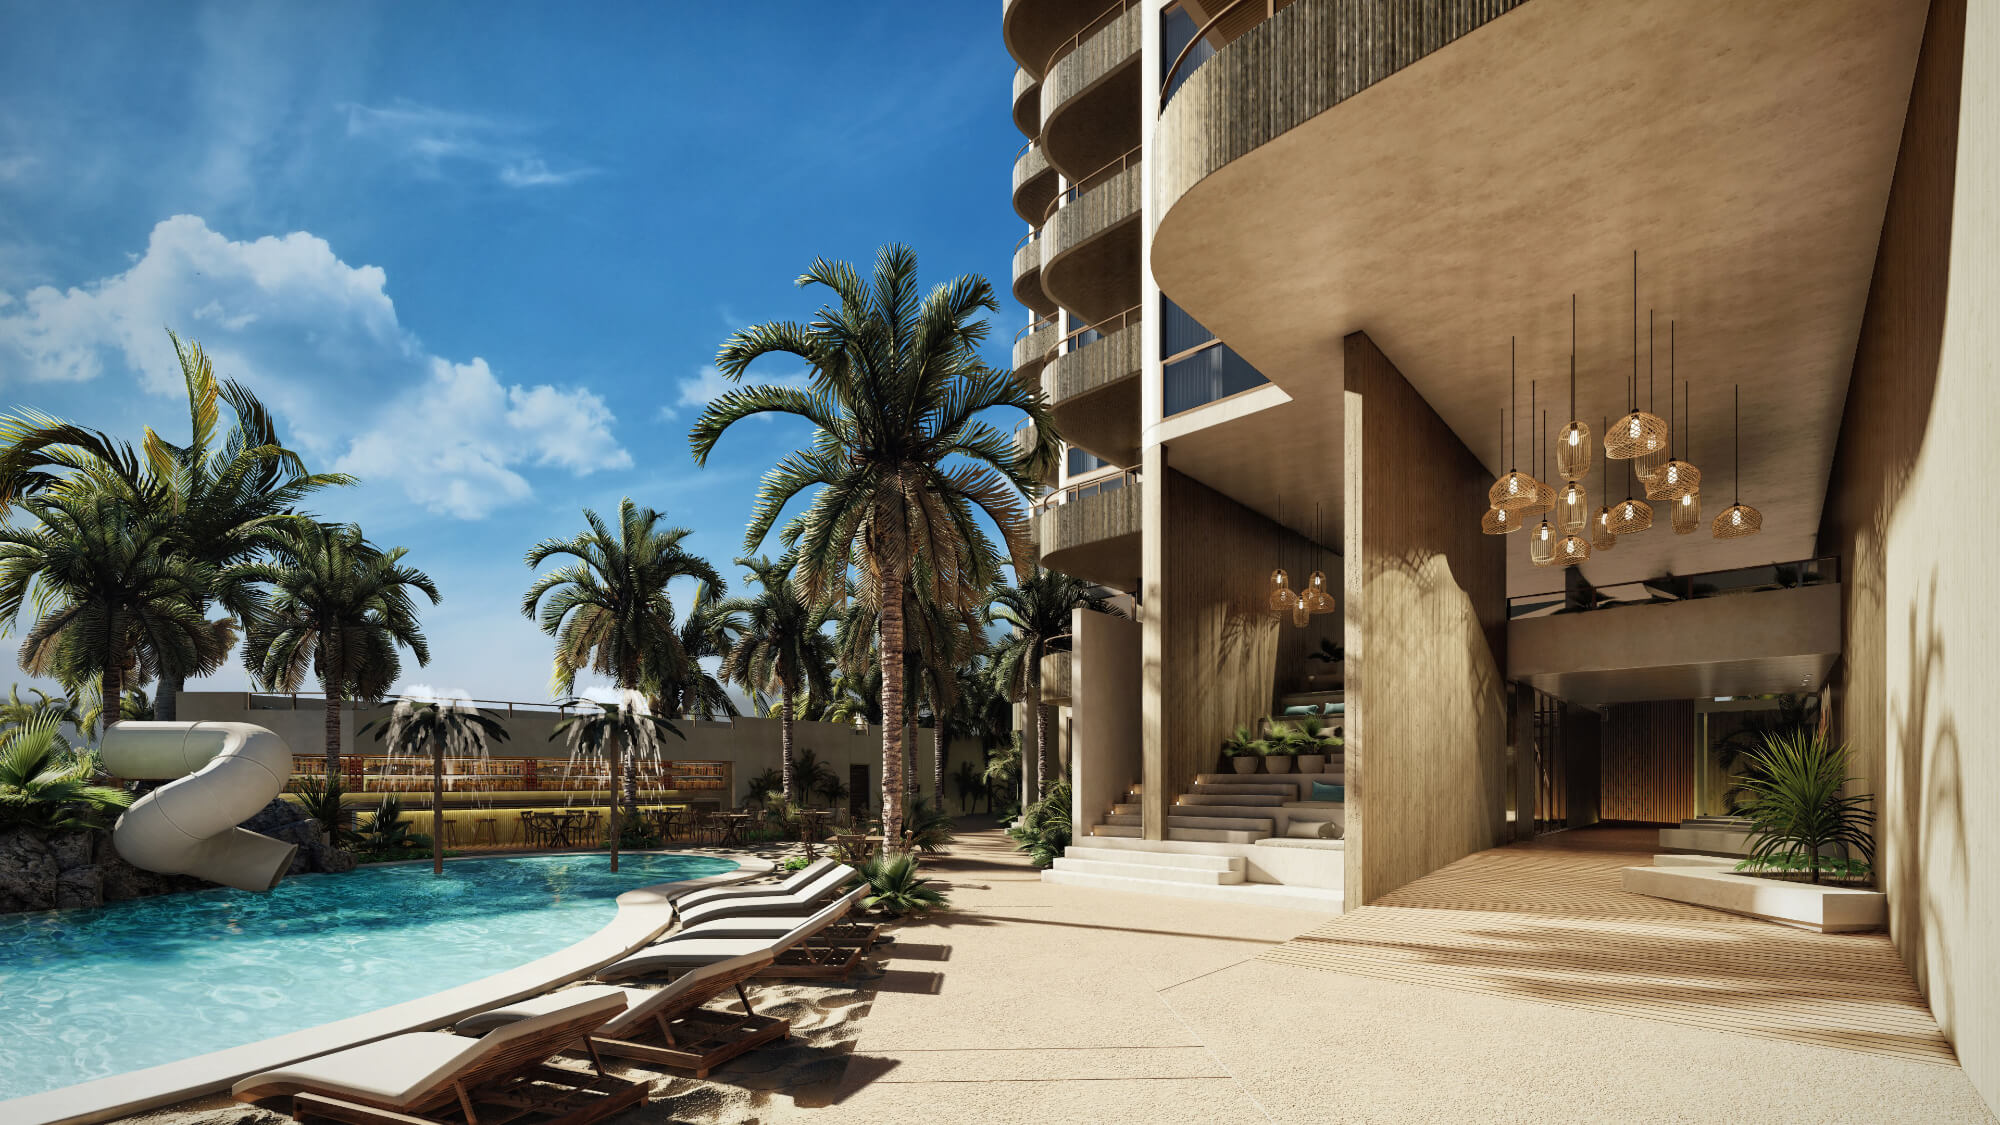 Beachfront apartment, terrace, hammocks and palapas, pre-construction, San Crisanto, sale, Mérida